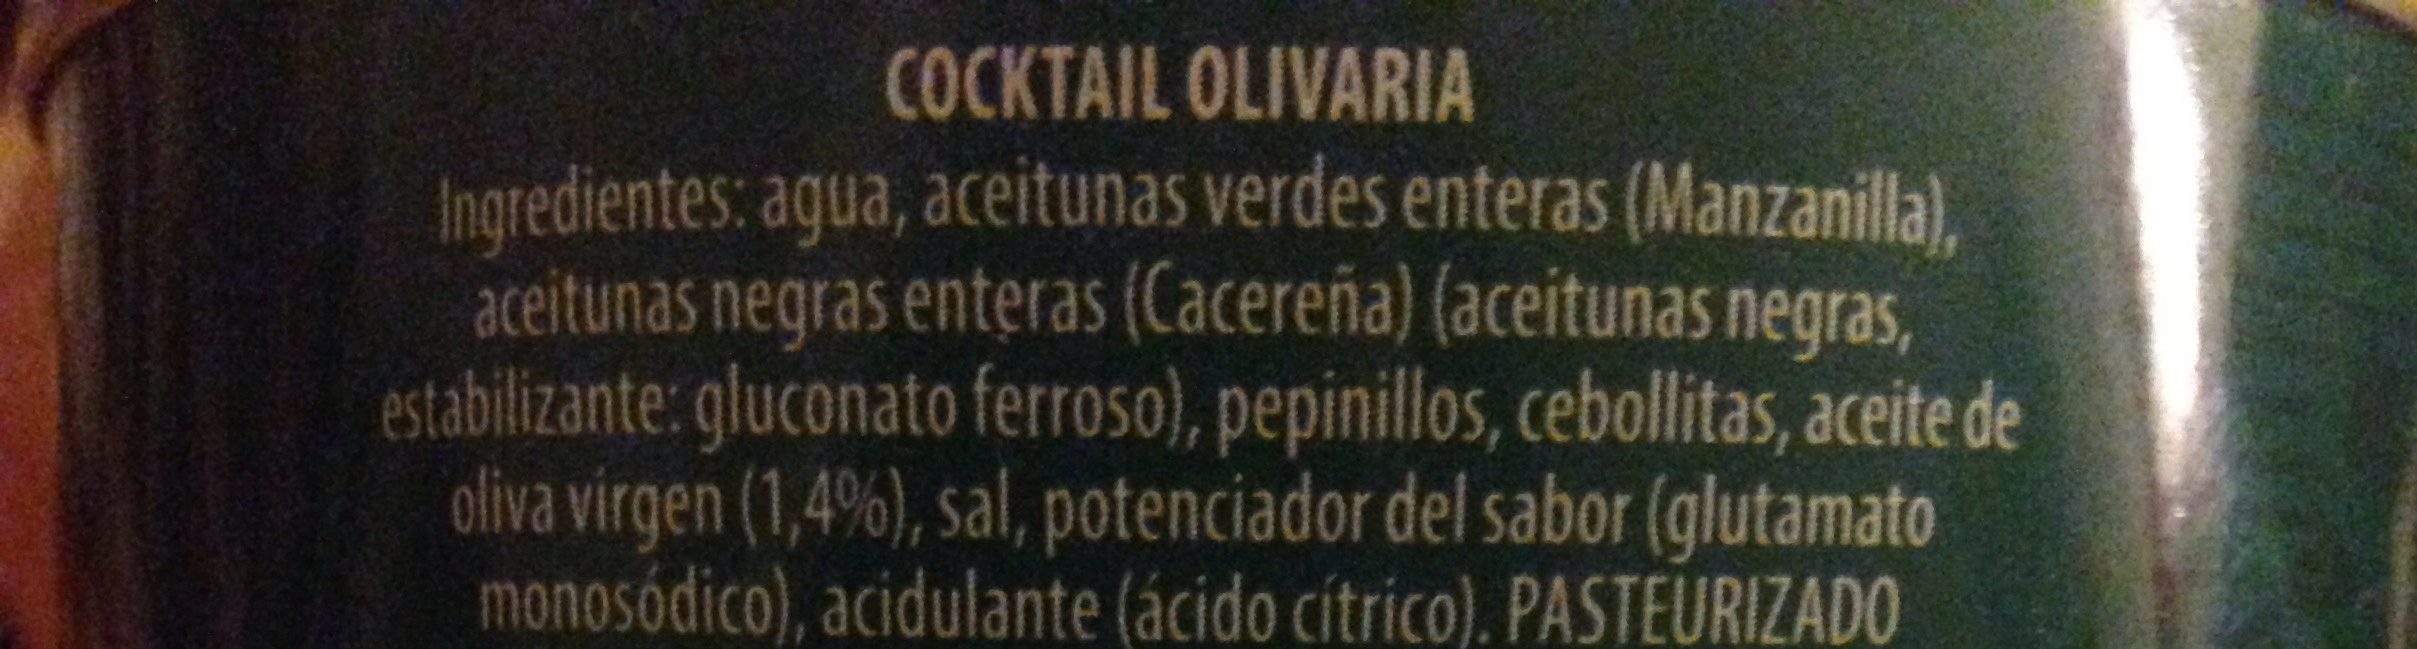 DeTapas Olivaria cocktel de encurtidos lata 1,5 kg - Ingredients - es